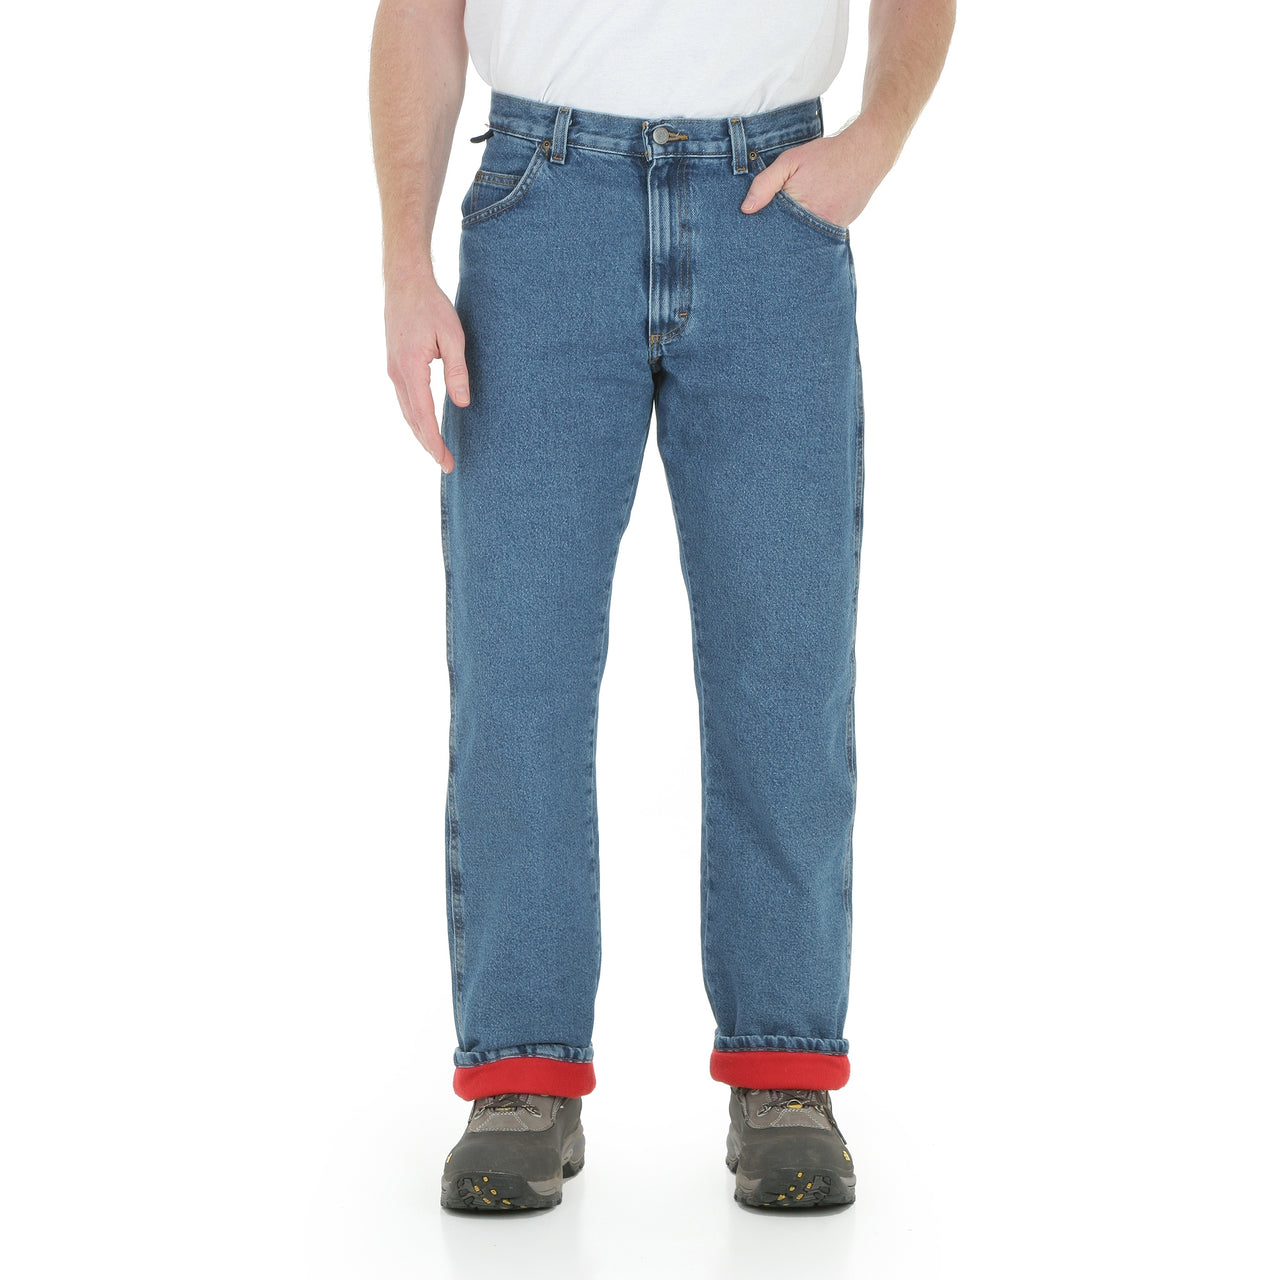 Wrangler Rugged Wear Thermal Men's Jeans - Stonewashed Denim w Red Lining